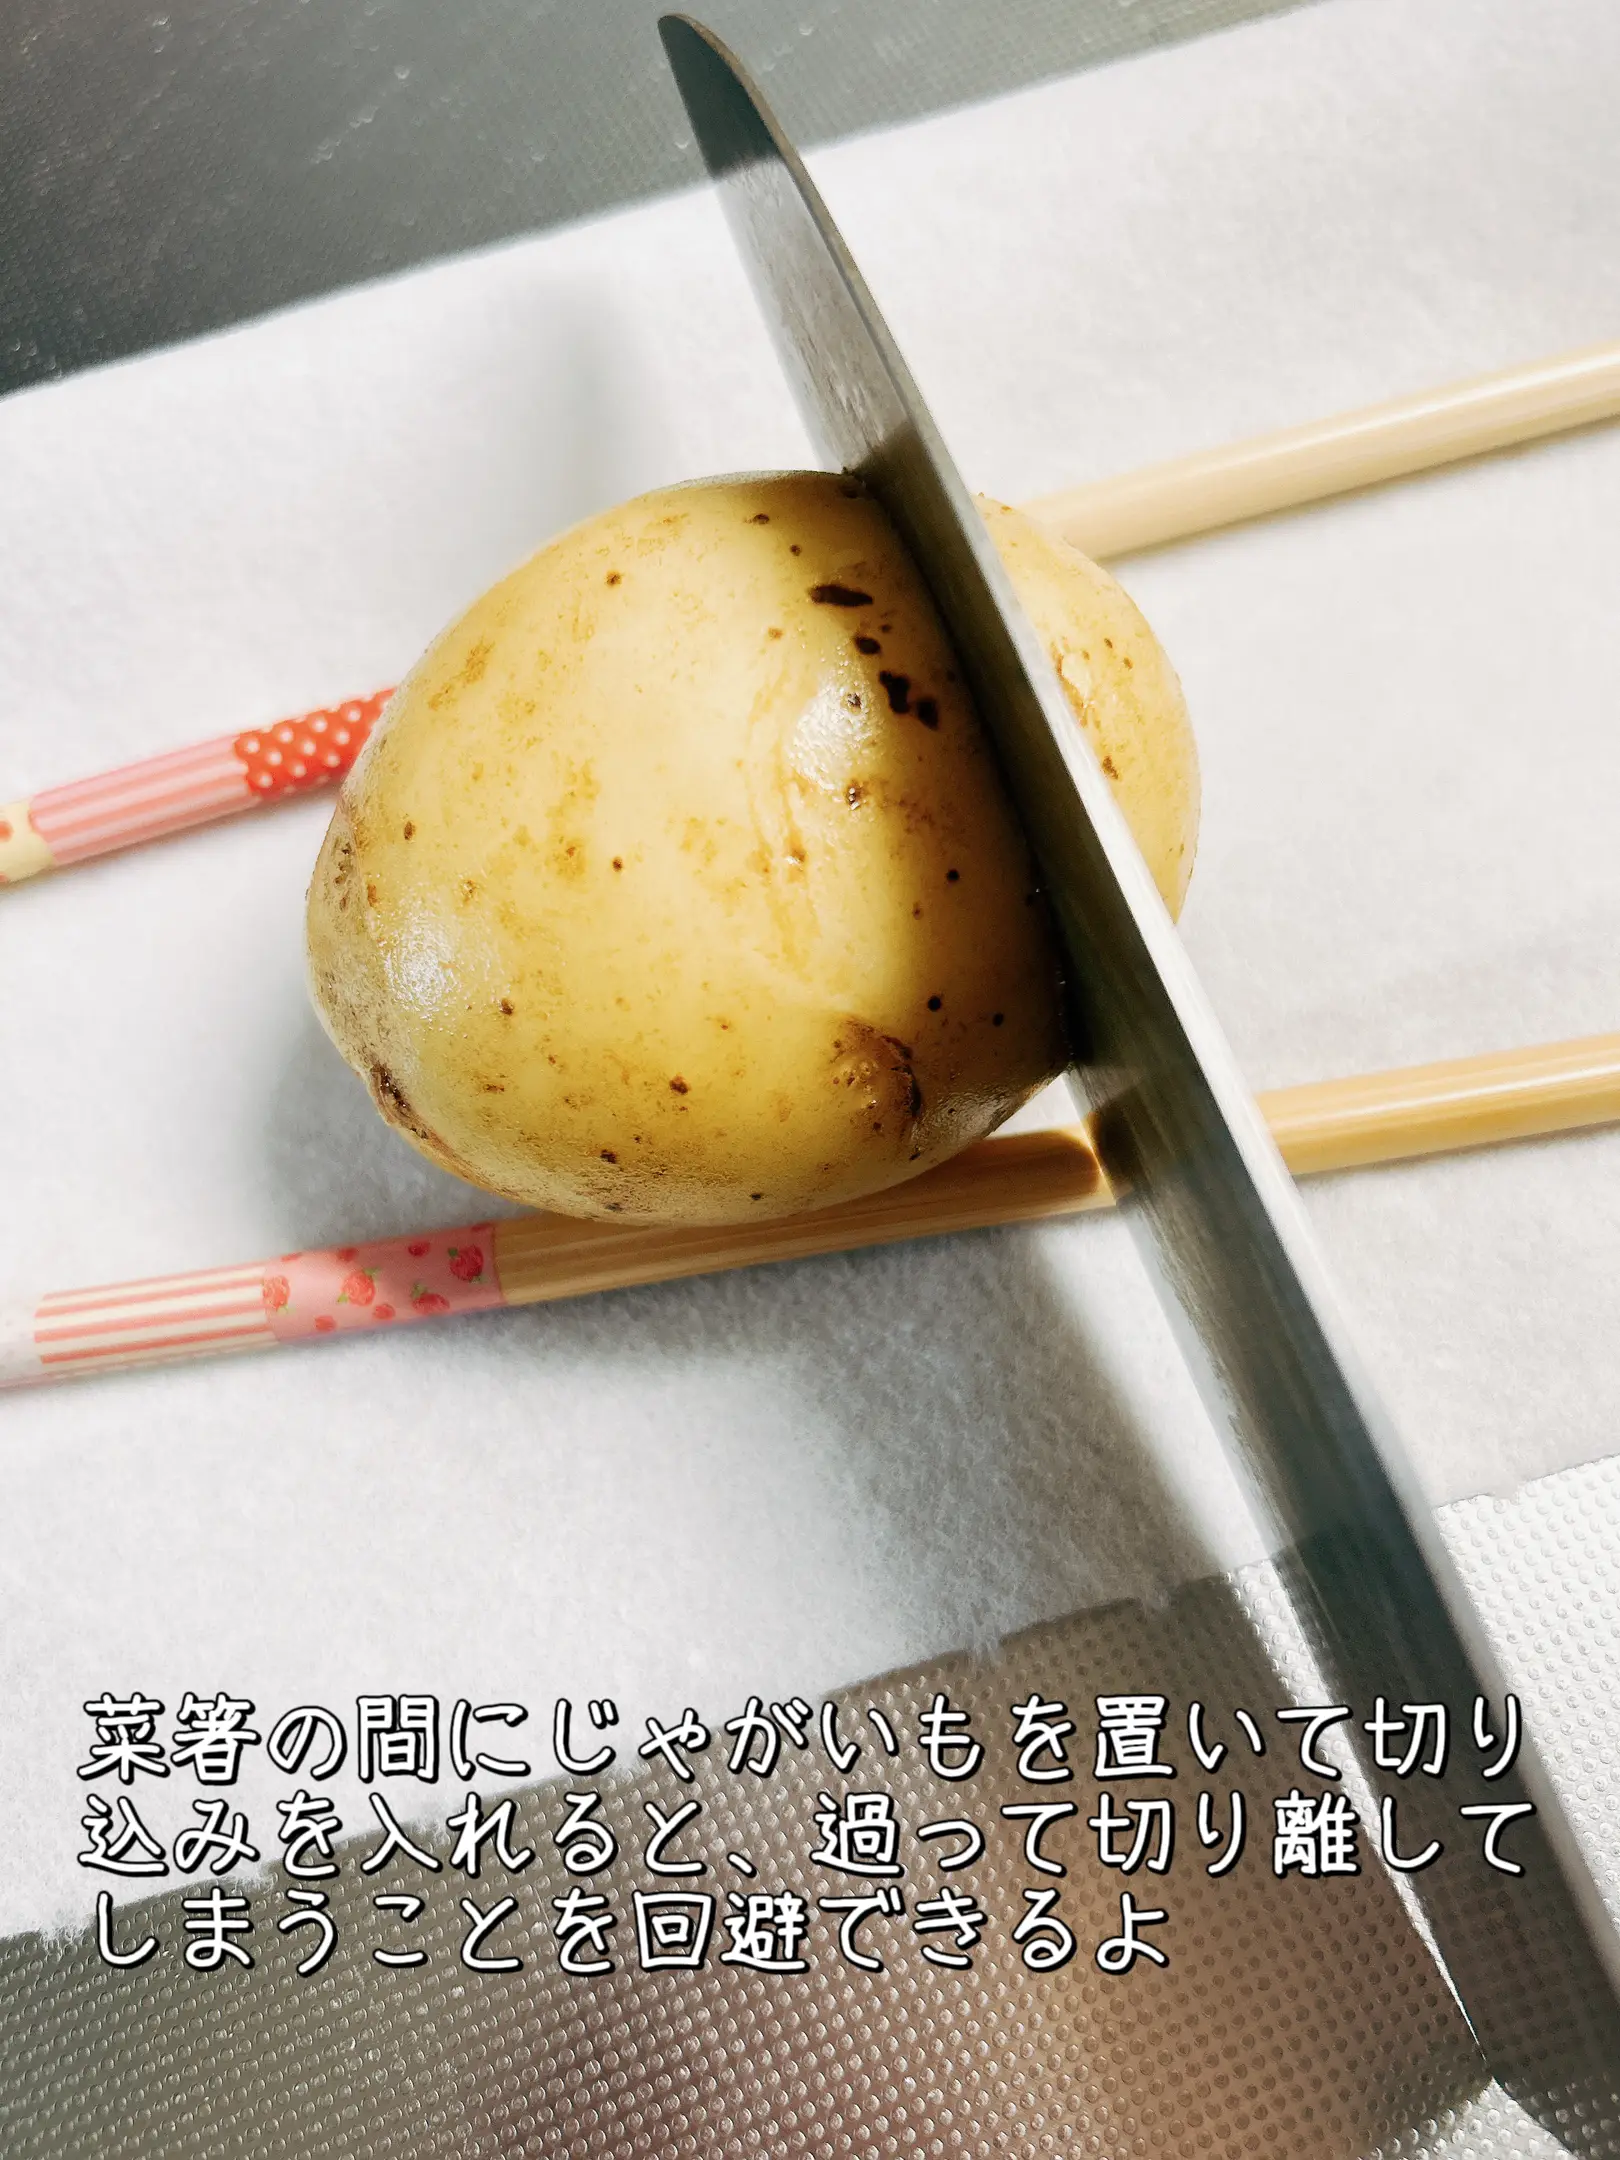 Hasselback potato cutter (Slicer) - Version 2 by Joe